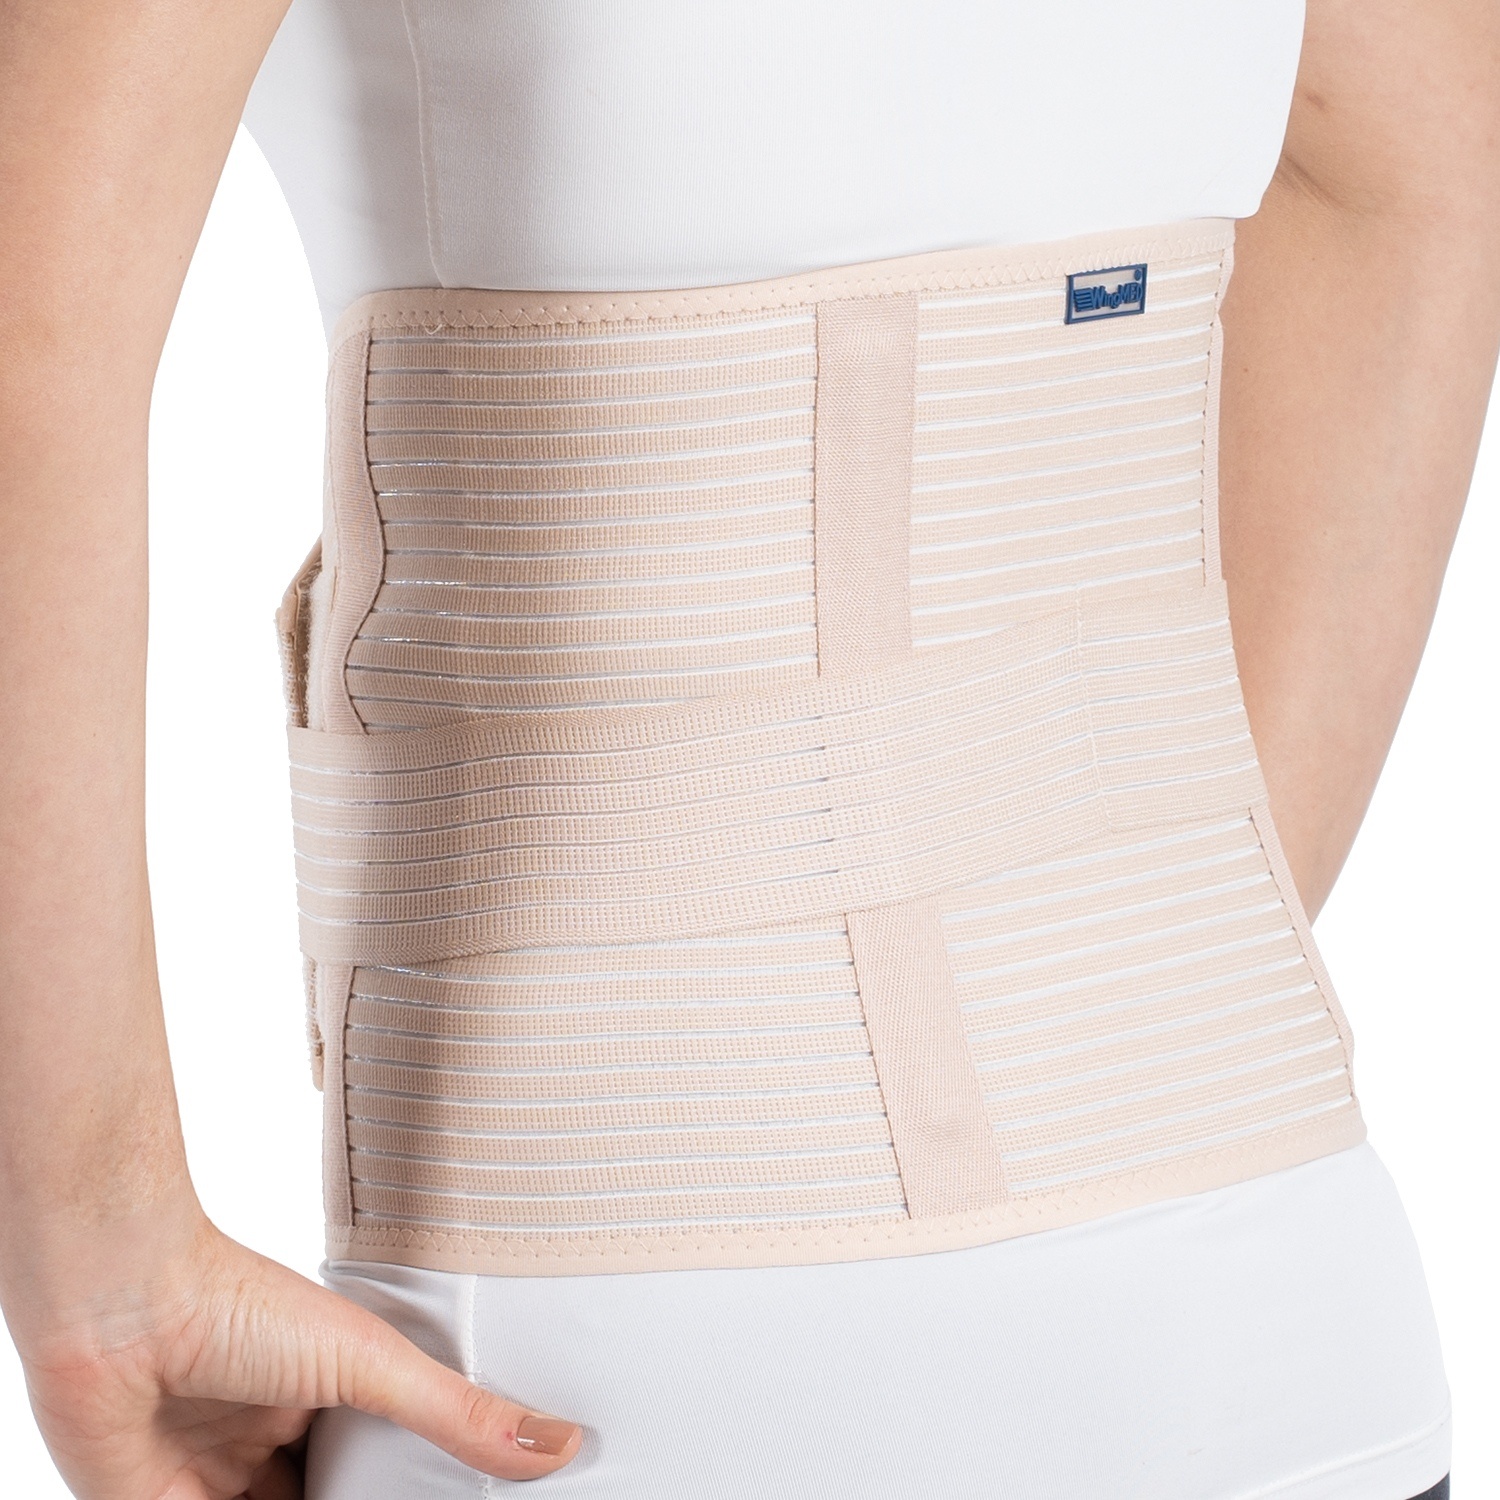 https://www.wingmed.com.tr/wp-content/uploads/2020/03/wingmed-orthopedic-equipments-W445-abdominal-corset-26cm-plus-90.jpg